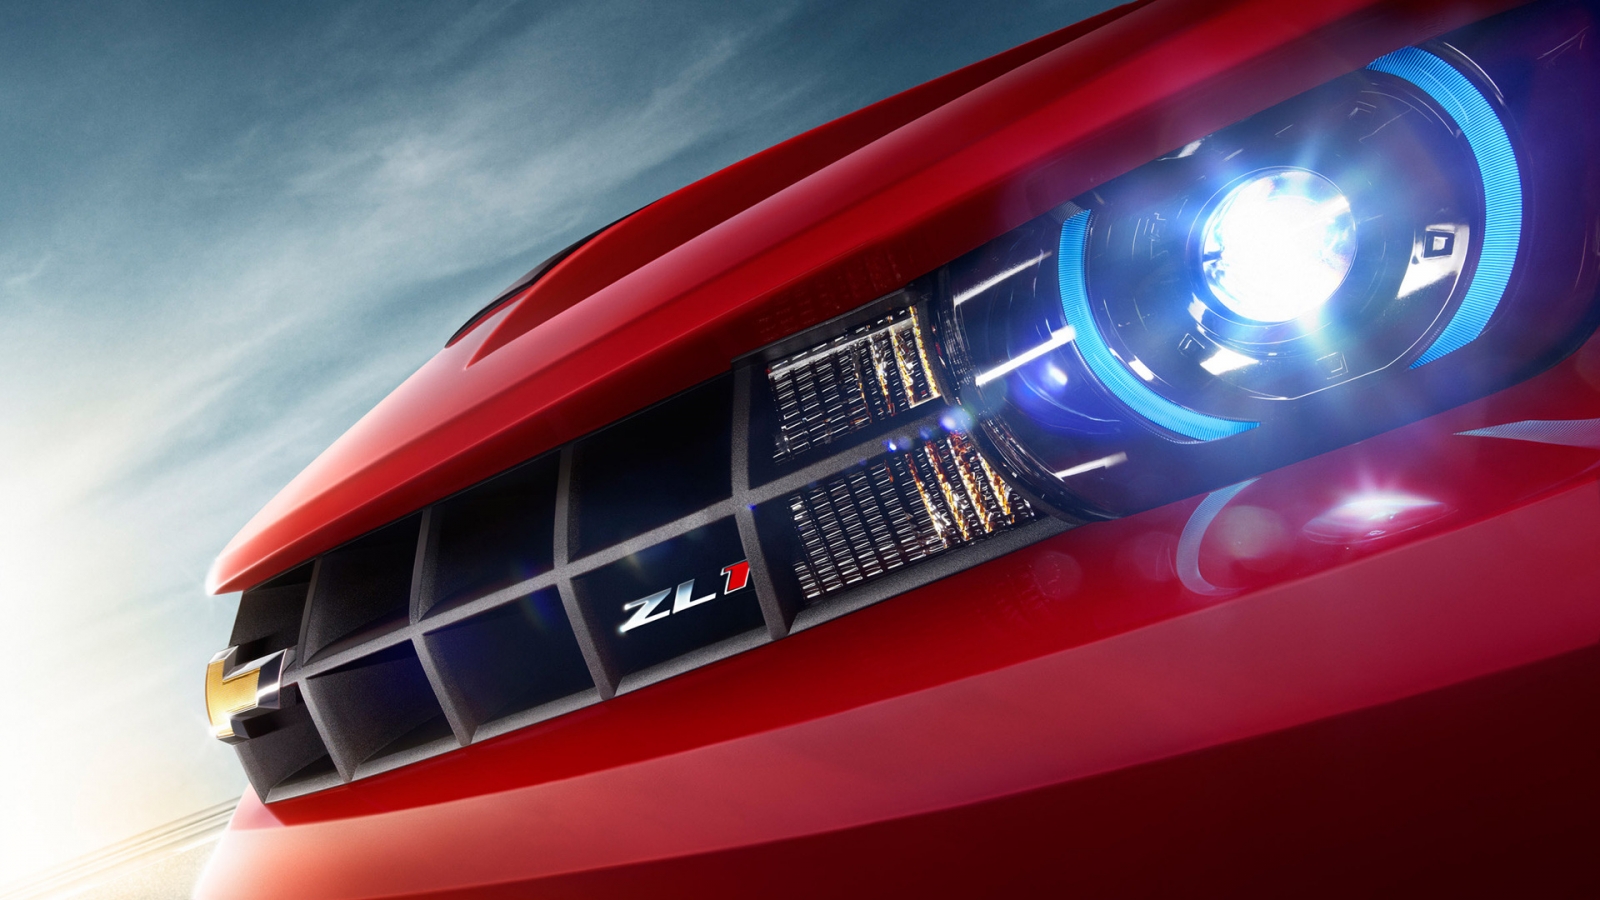 2012 Chevy Camaro ZL1 Headlight for 1600 x 900 HDTV resolution